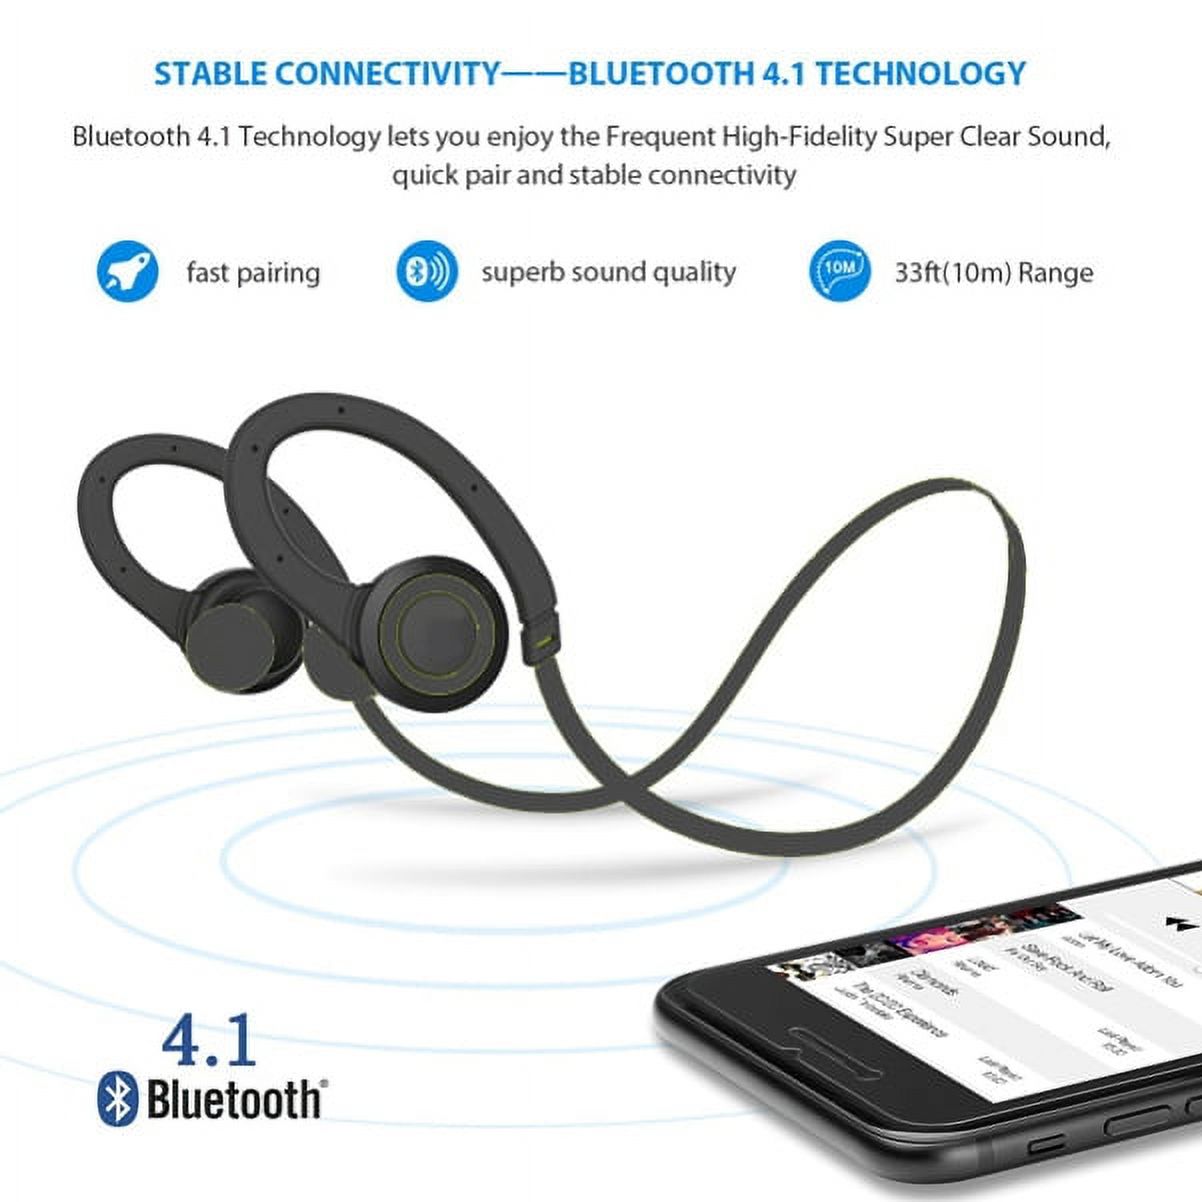 AWAccessory Bluetooth Sports In-Ear Headphones, Black, A03-JONBJL - image 3 of 6